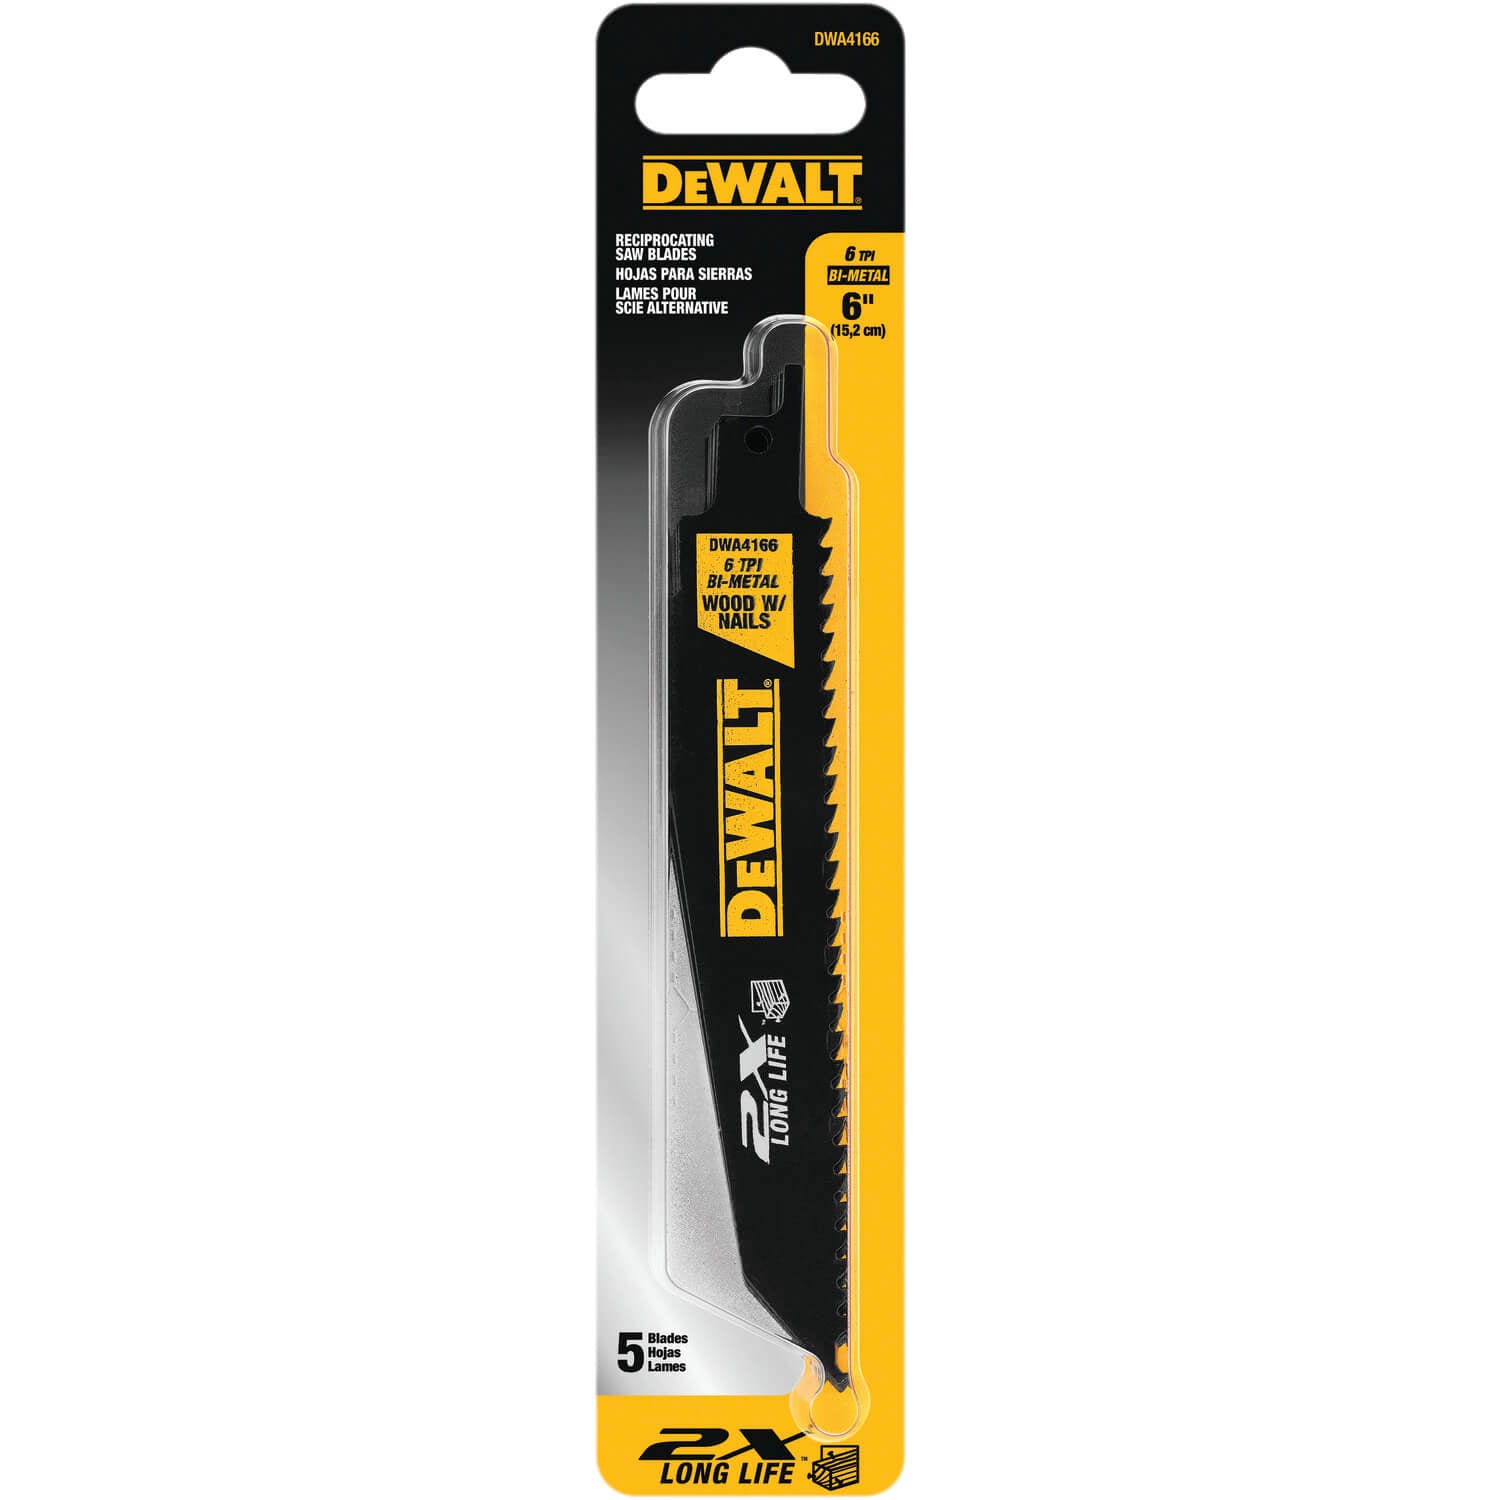 DEWALT 6" Wood with Nails Recip Blades 6TPI - wise-line-tools